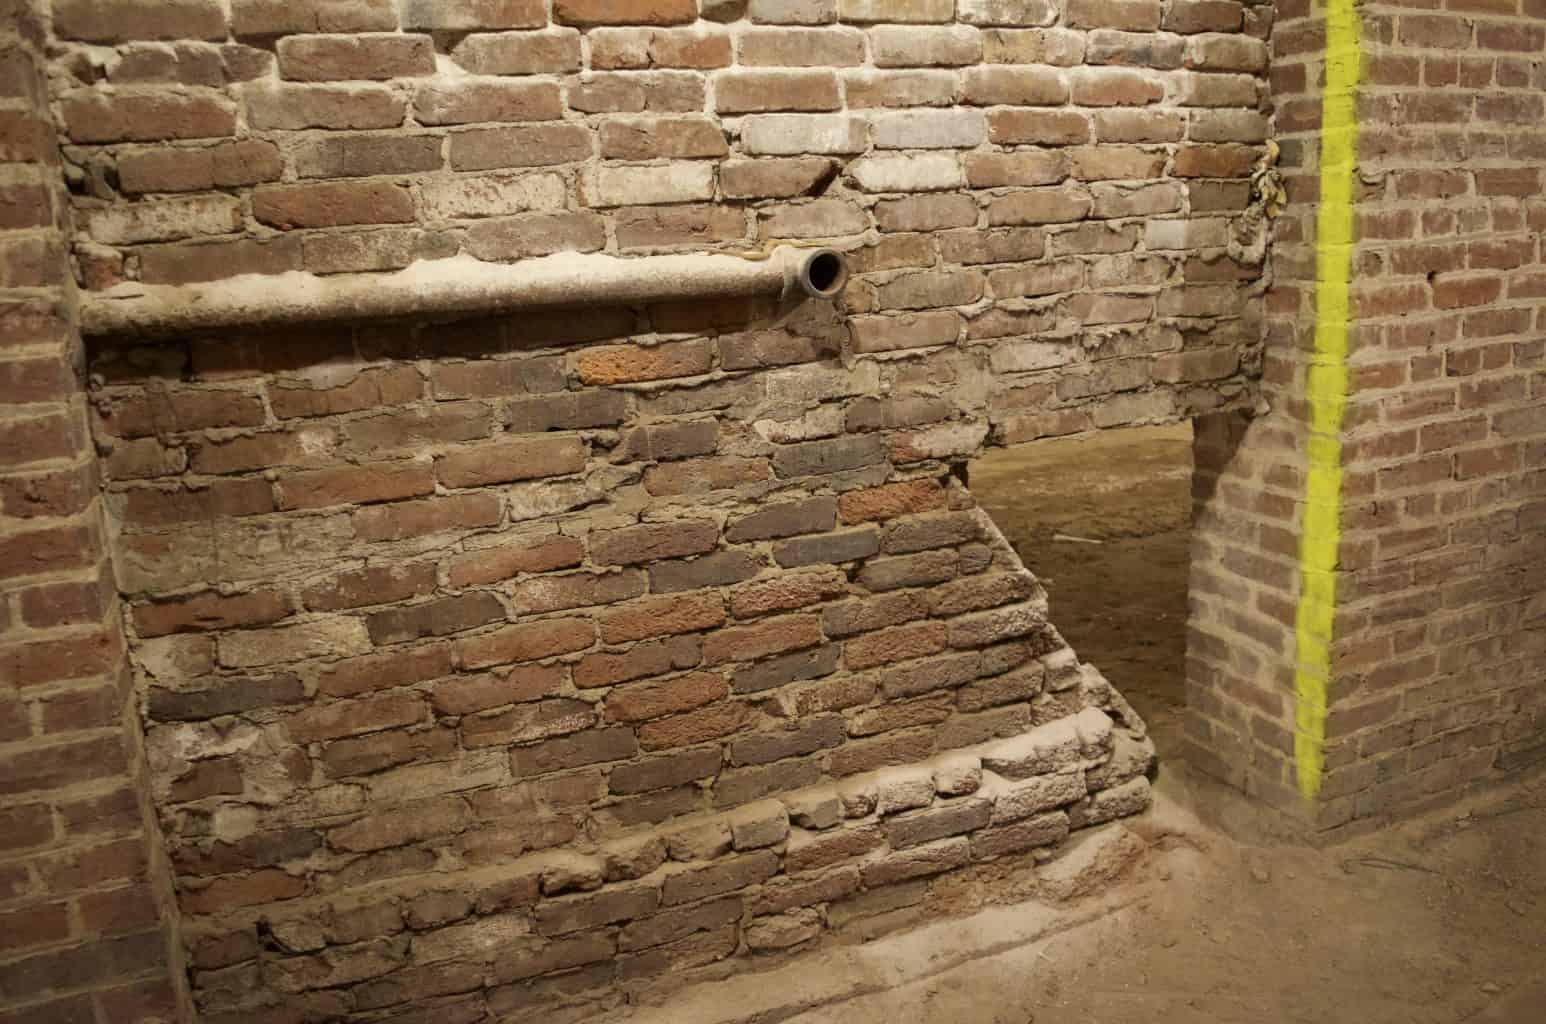 brick Catacombs tunnel Below Indianapolis, Indiana